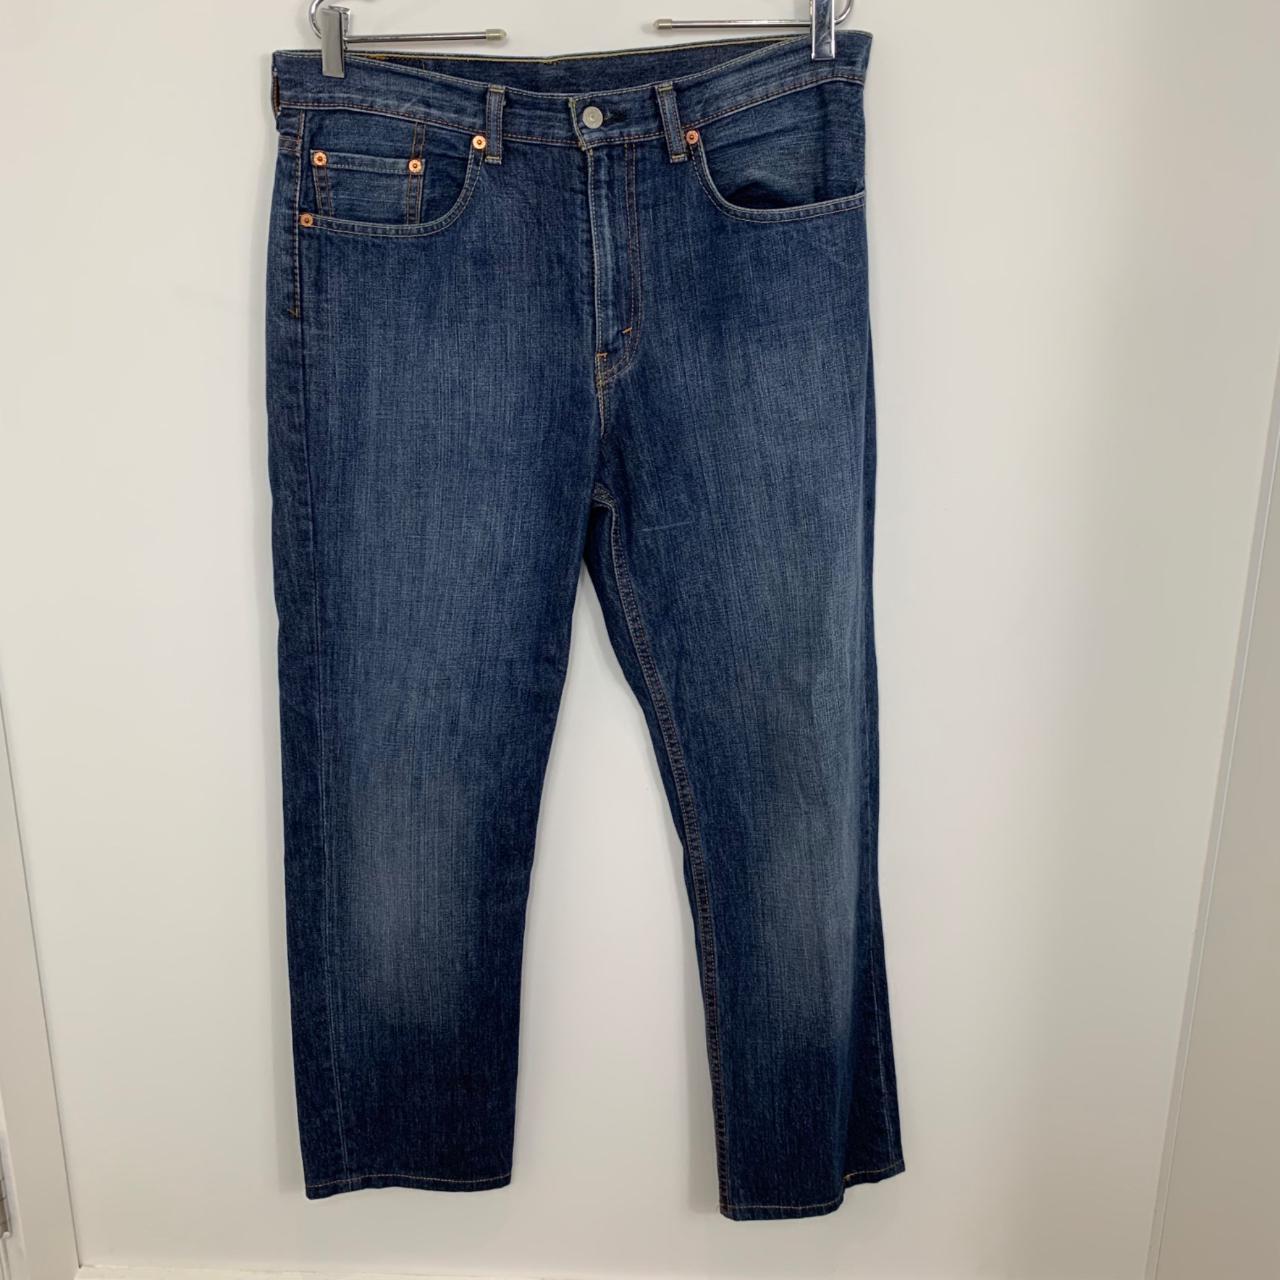 Levi’s 504 Blue Jeans Mens Size 36x28 Medium Wash... - Depop